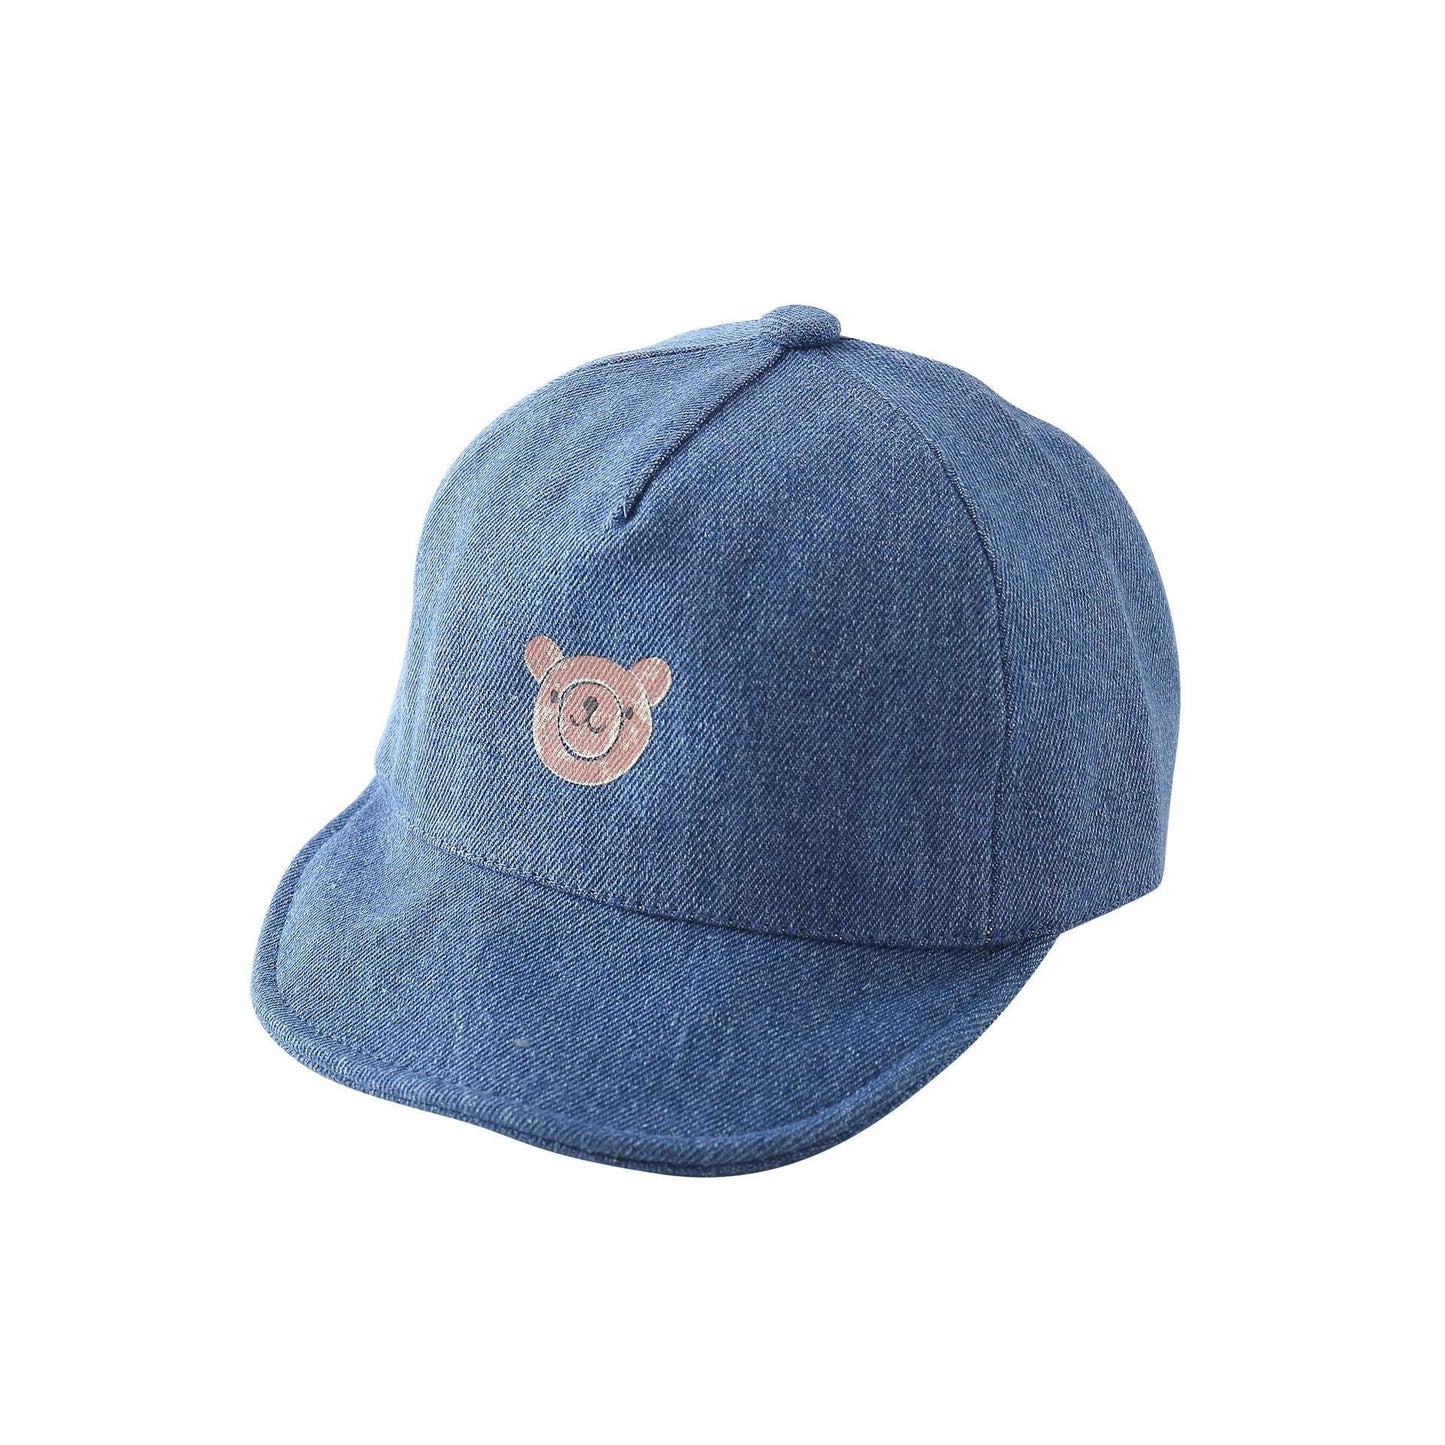 Adjustable Baby Hat, Infant Sun Hat, Toddler Denim Cap - available at Sparq Mart